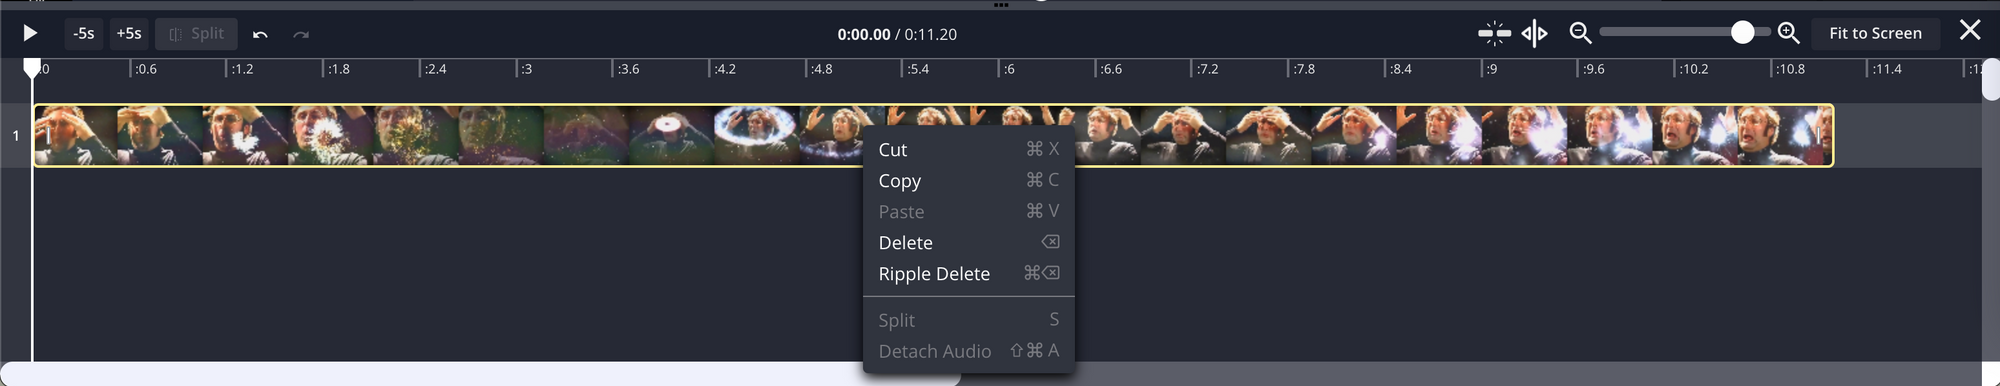 A screenshot of the Timeline dropdown menu open, which shows the options to Cut, Copy, Paste, Delete, Ripple Delete, Split or Detach Audio.